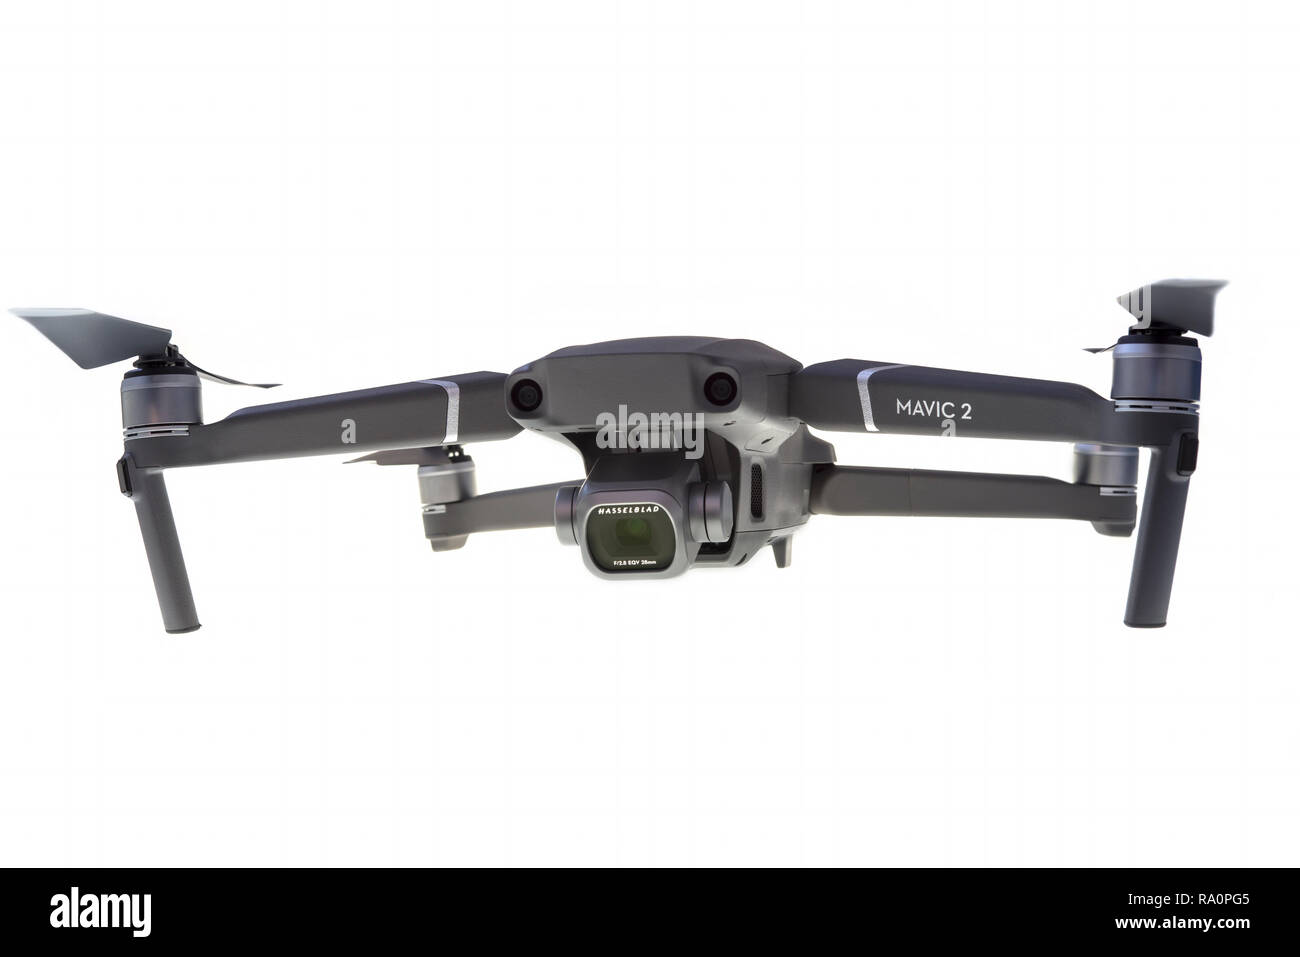 PIATRA Neamt, Roumanie - 12 octobre 2018 : 2 Mavic Pro drone avec appareil photo Hasselblad over white Banque D'Images